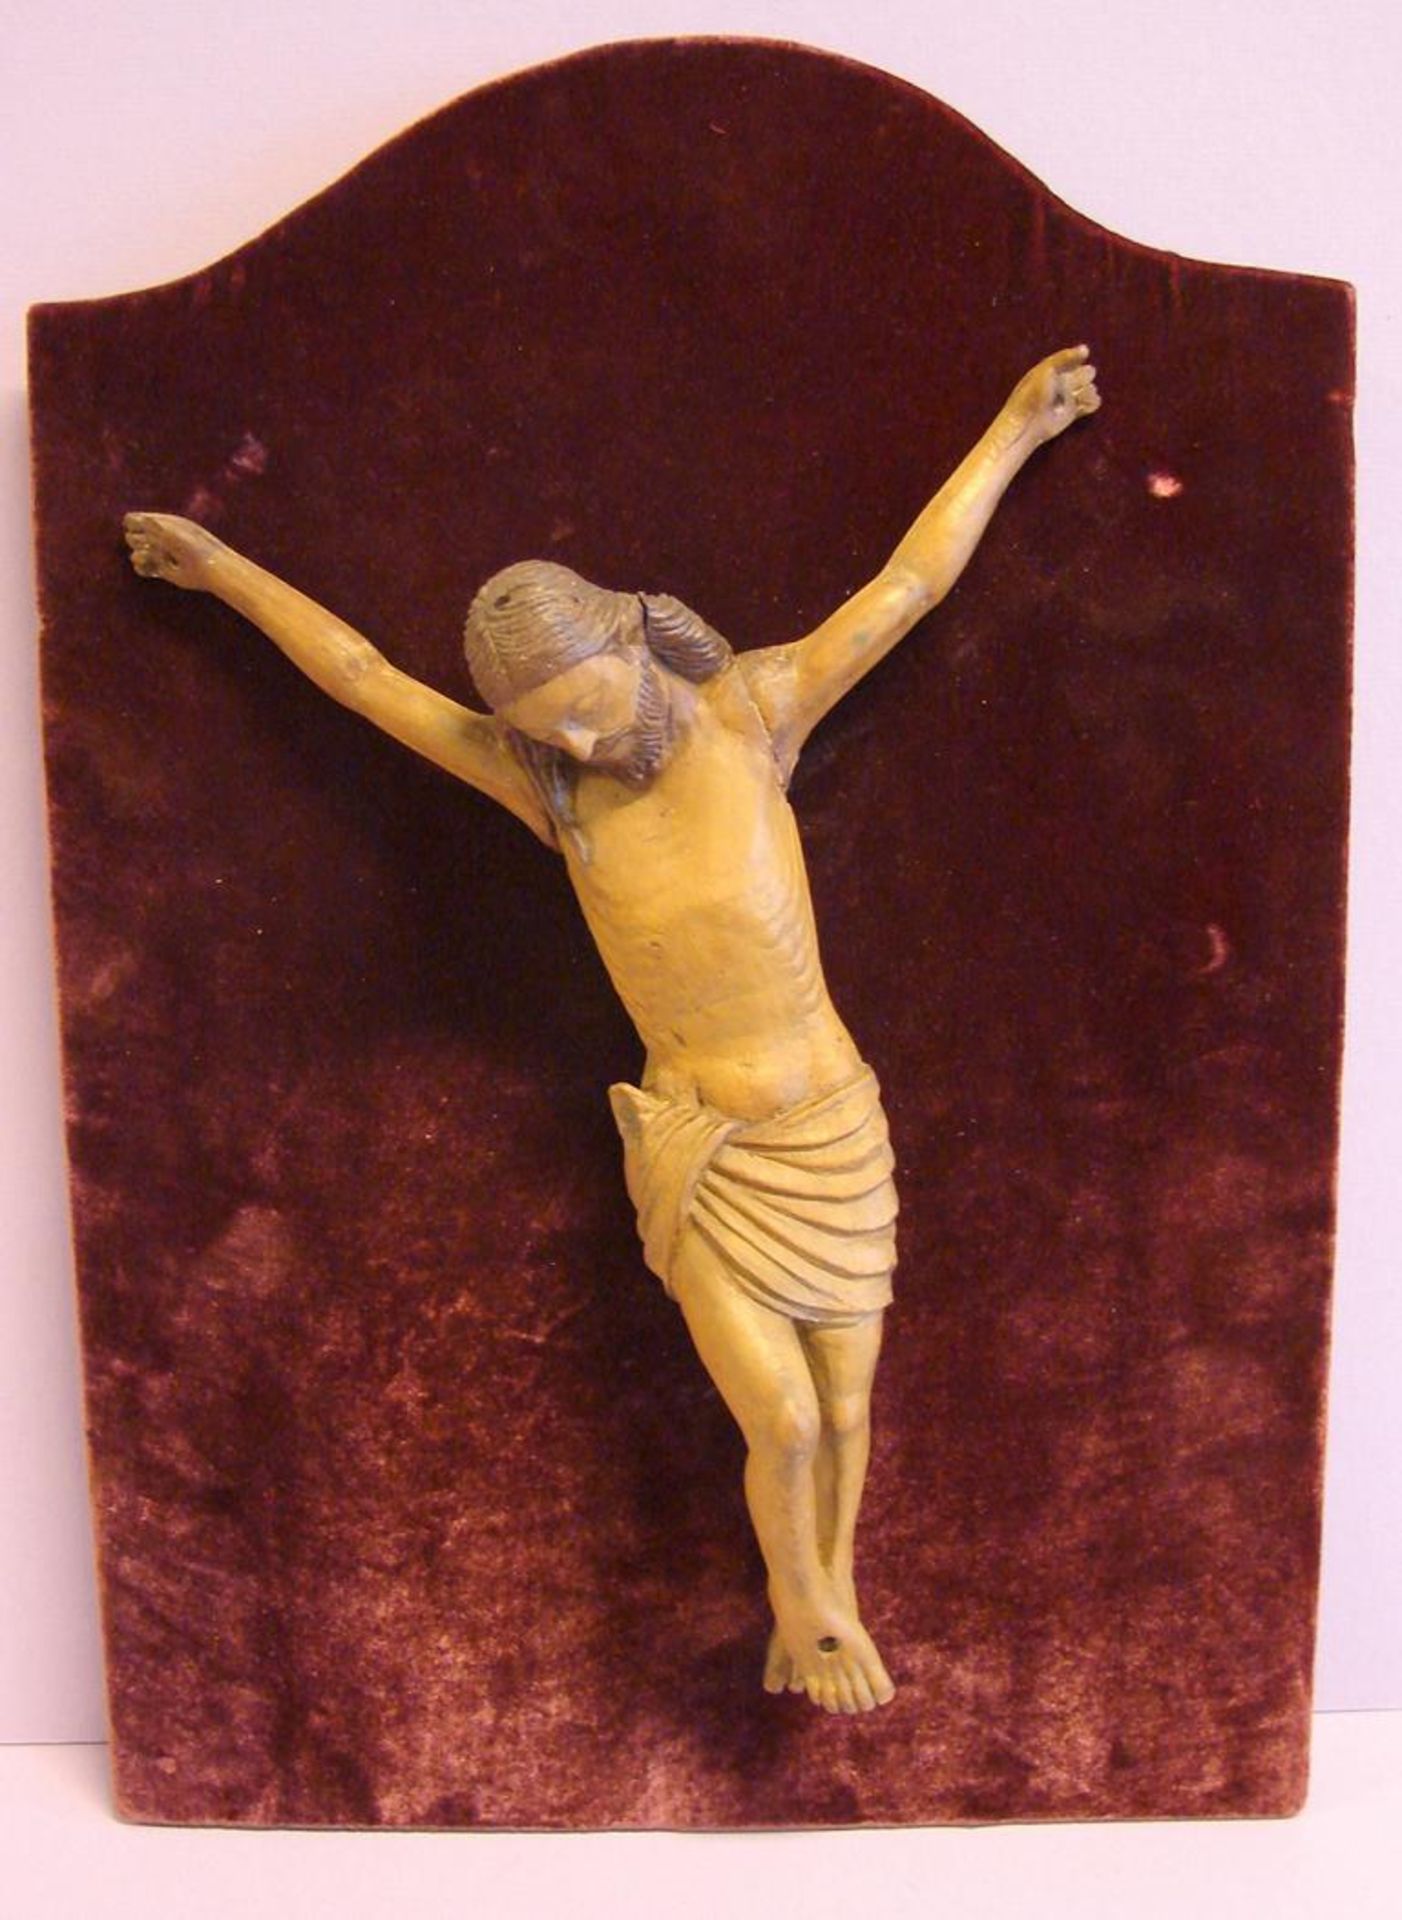 Christus am Kreuz, auf Samt bezogenes Brett, Lindenholz, wohl um 1500, ca.32x23 cm- - -22.00 %